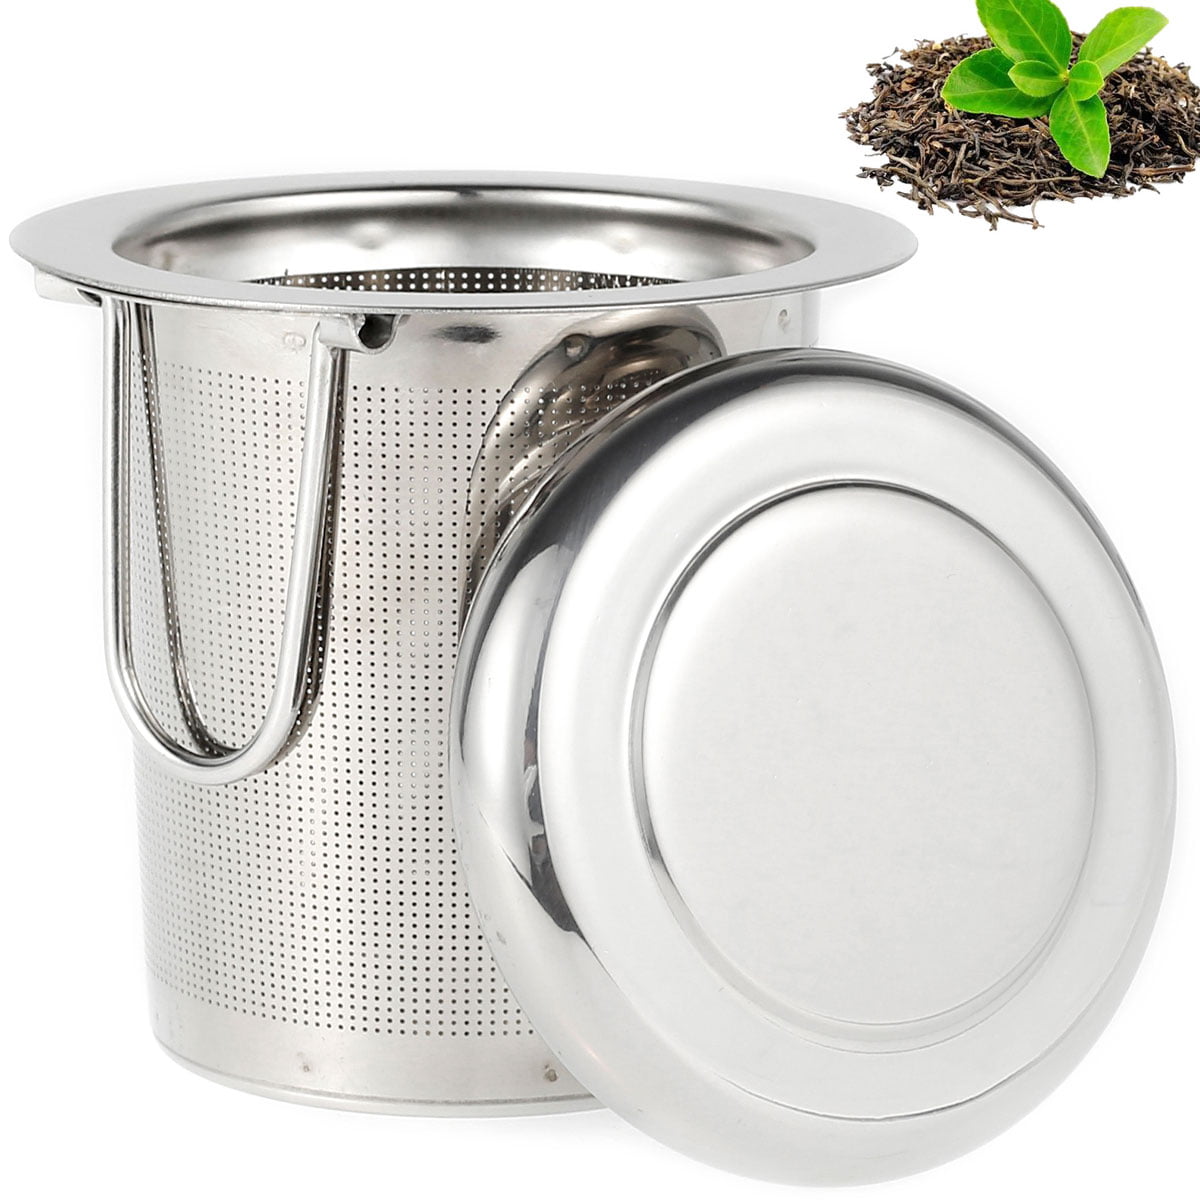 Reusable Mesh Tea Infuser Strainer Stainless Steel Tea Leaf Filter with Handle